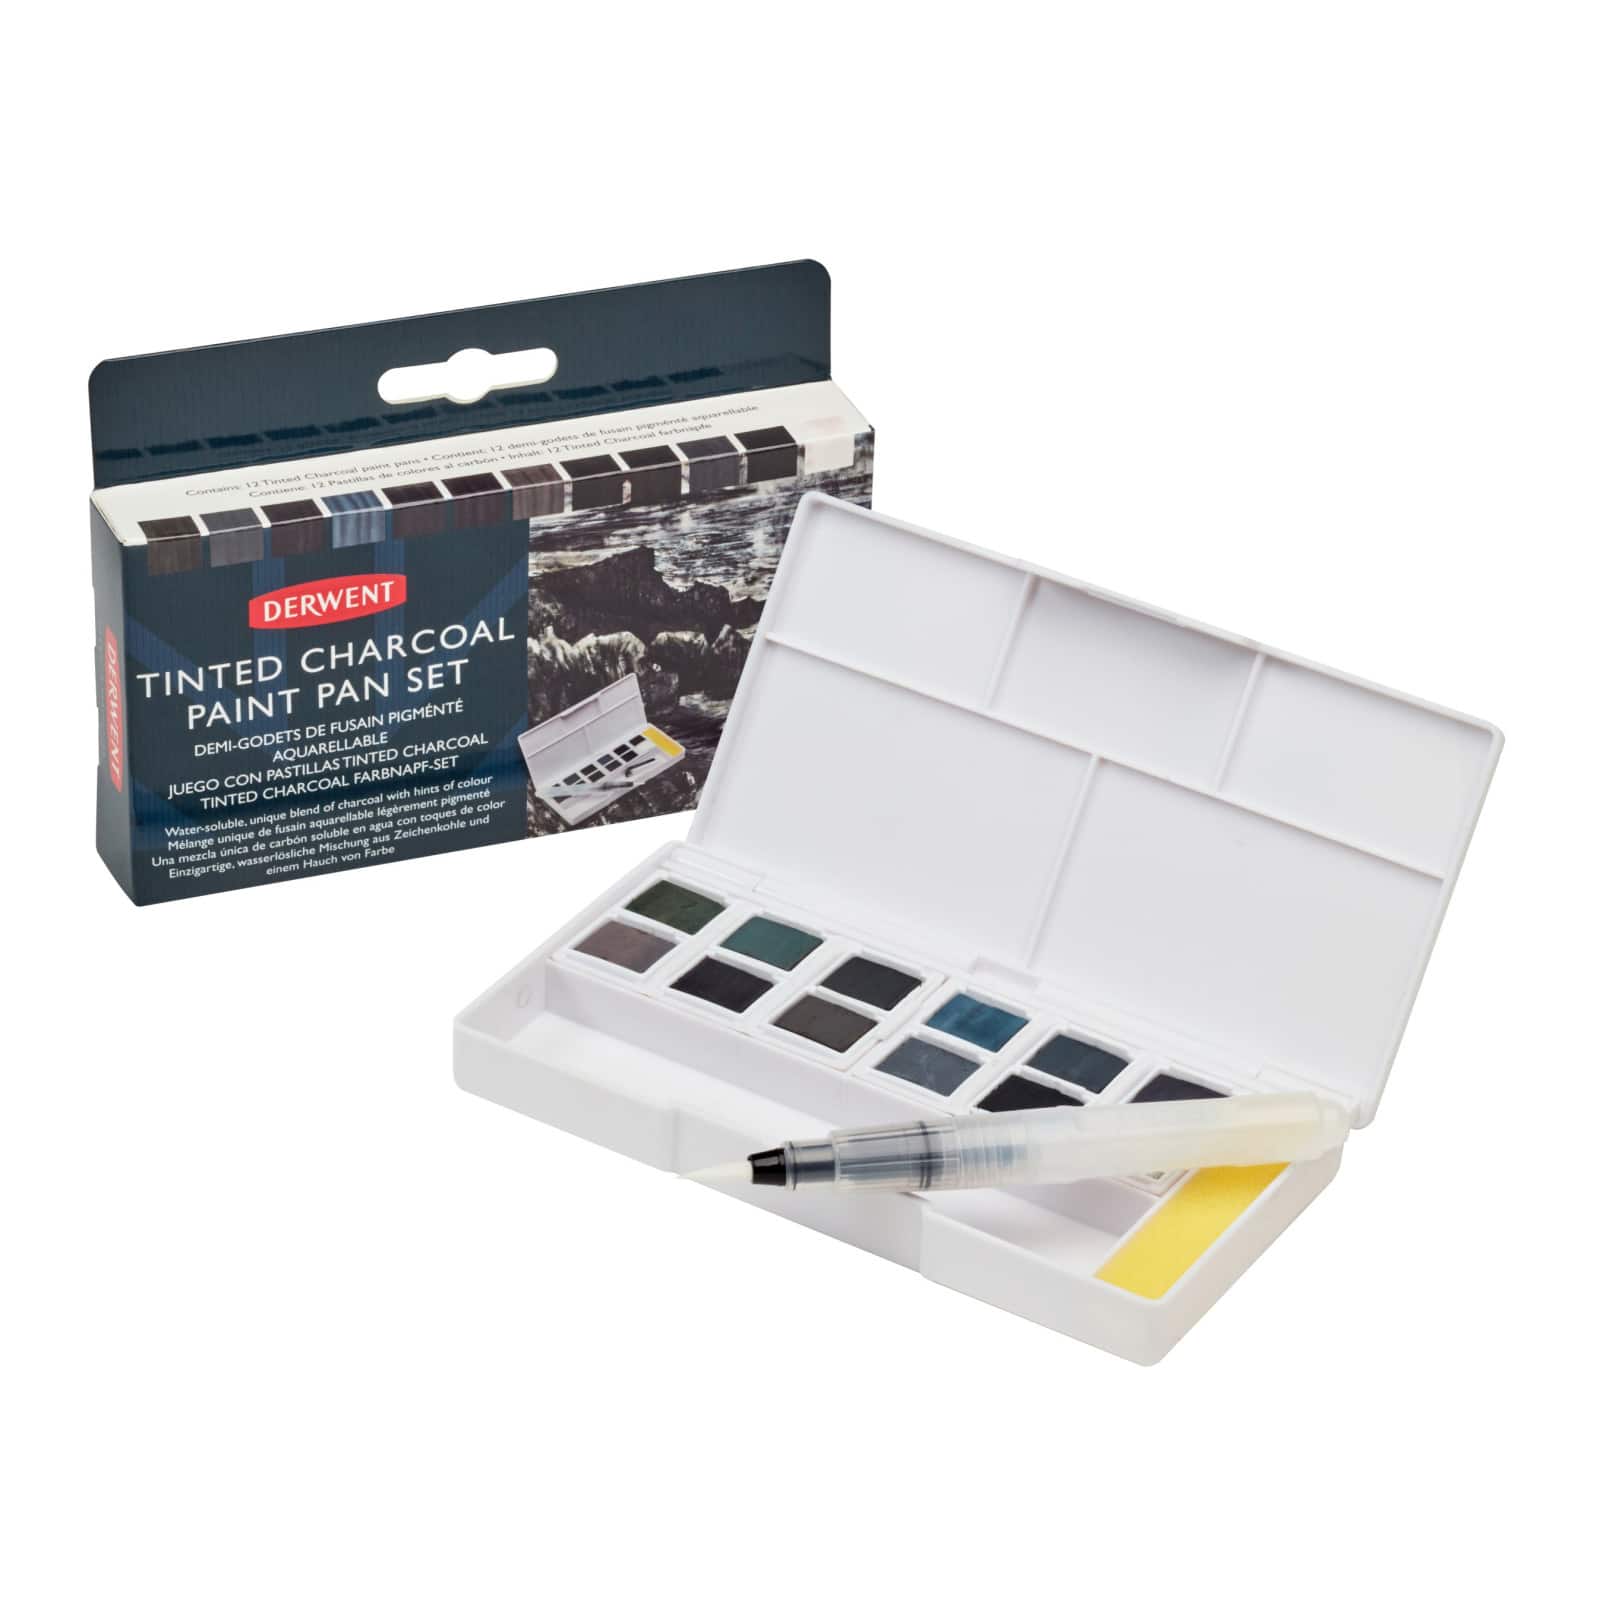 Derwent 12 Color Tinted Charcoal Paint Pan Set